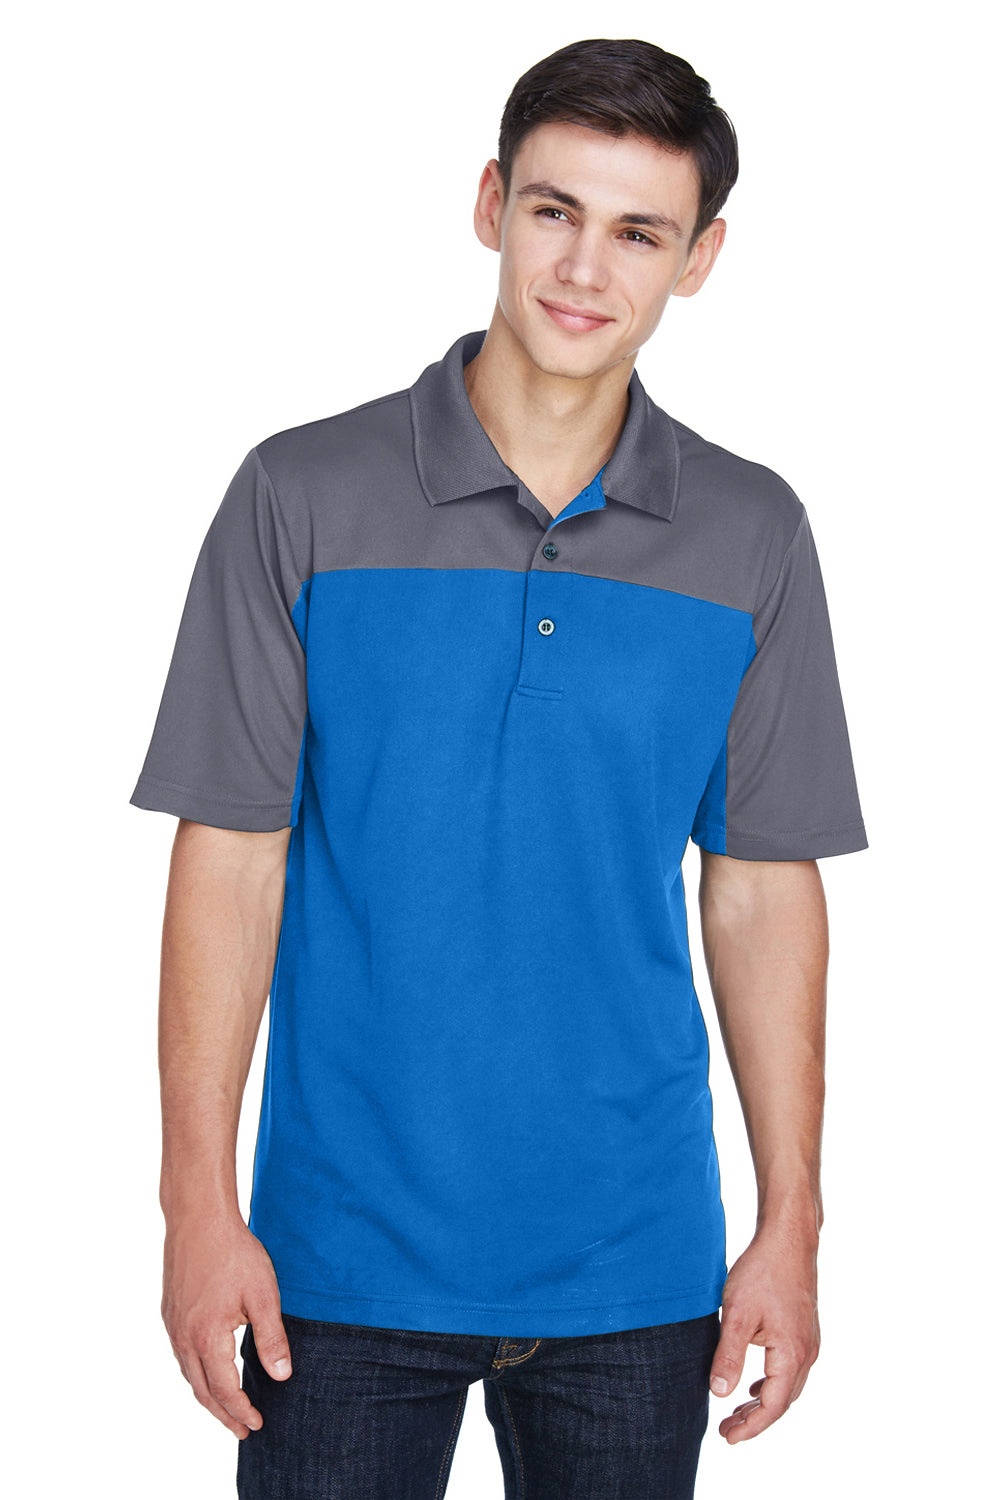 Core 365 CE101 Mens Balance Performance Moisture Wicking Short Sleeve Polo Shirt Royal Blue/Grey Front